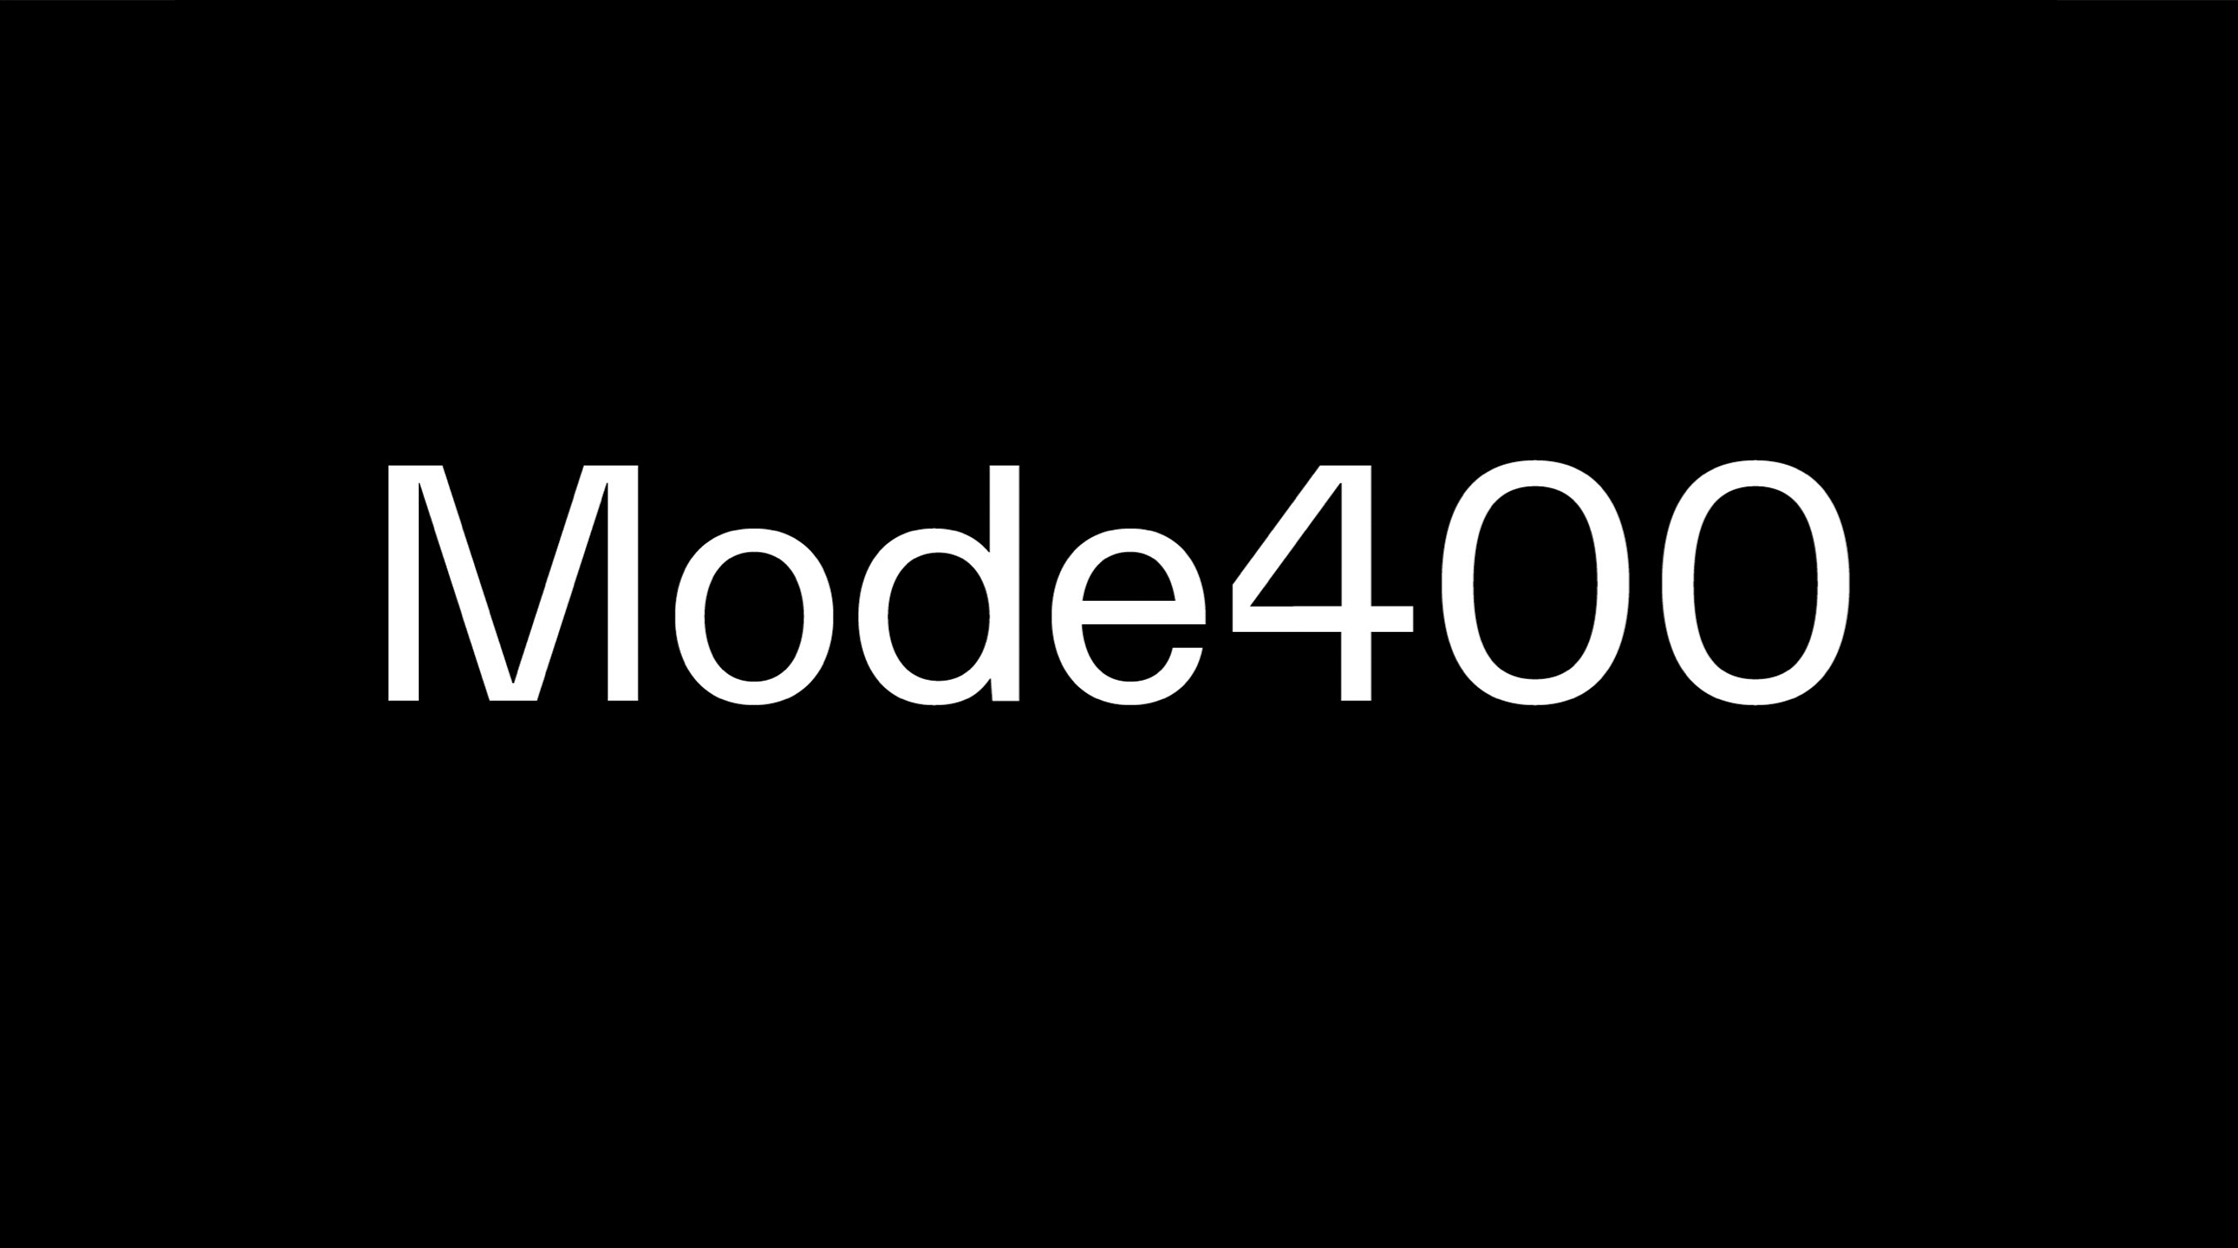 Mode 400